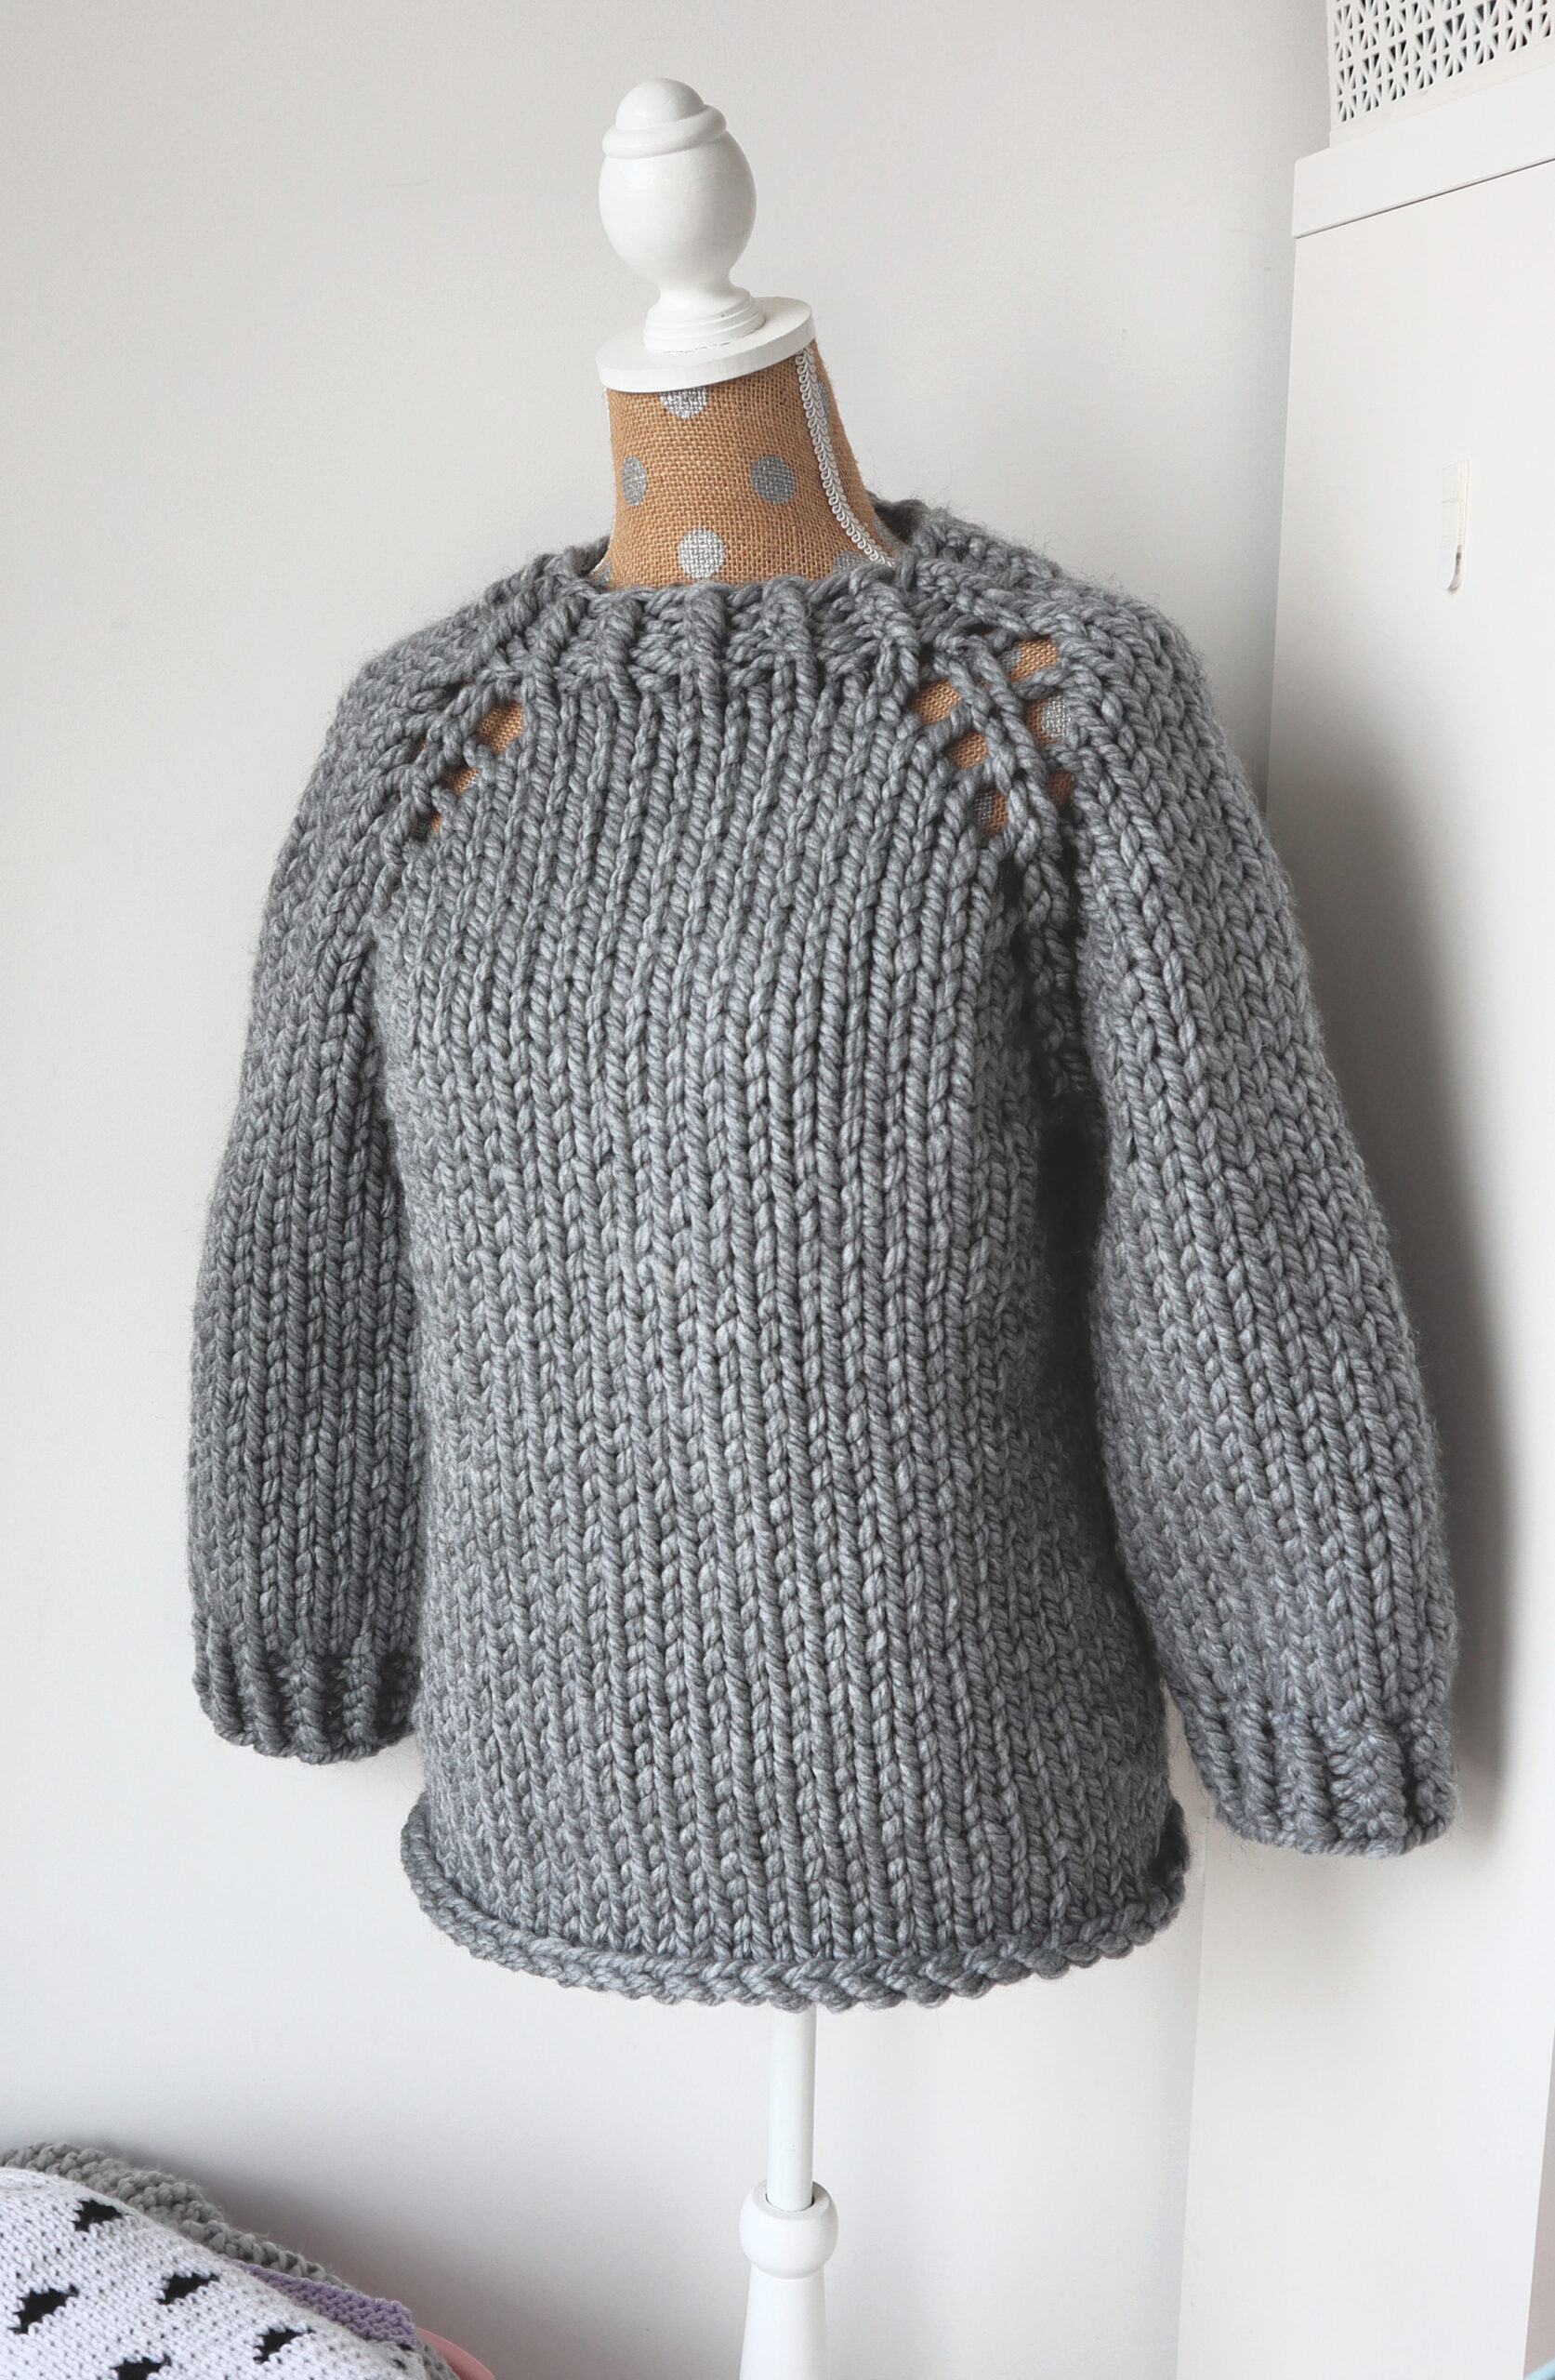 Super Chunky Raglan - Top Down Knit Sweater Pattern